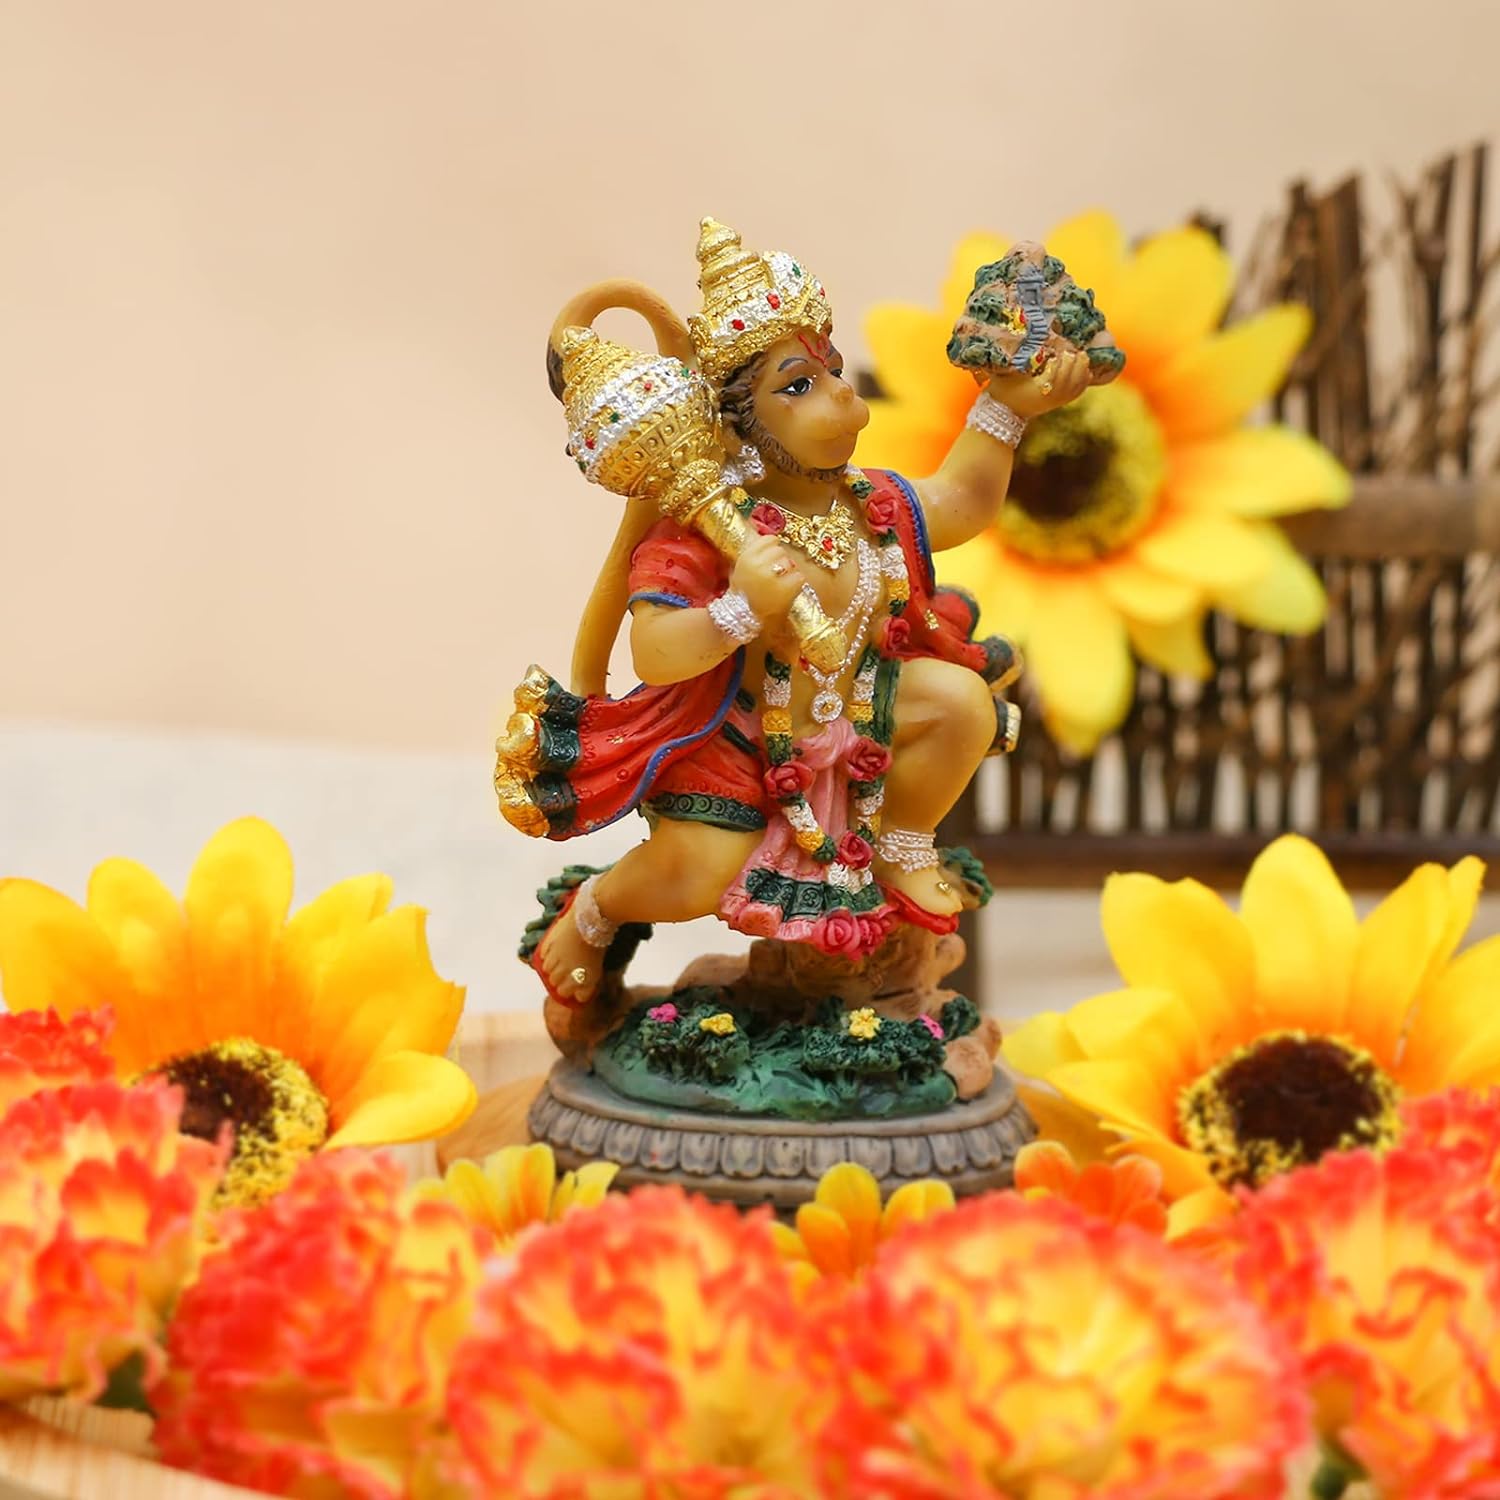 alikiki India Idol Lord Hanuman Statue - 3.9”H Hindu God Flying Hanuman Figurine for Car Dashboard Decor Indian Home Office Mandir Temple Altar Shrine Pooja Item Diwali Puja Gifts